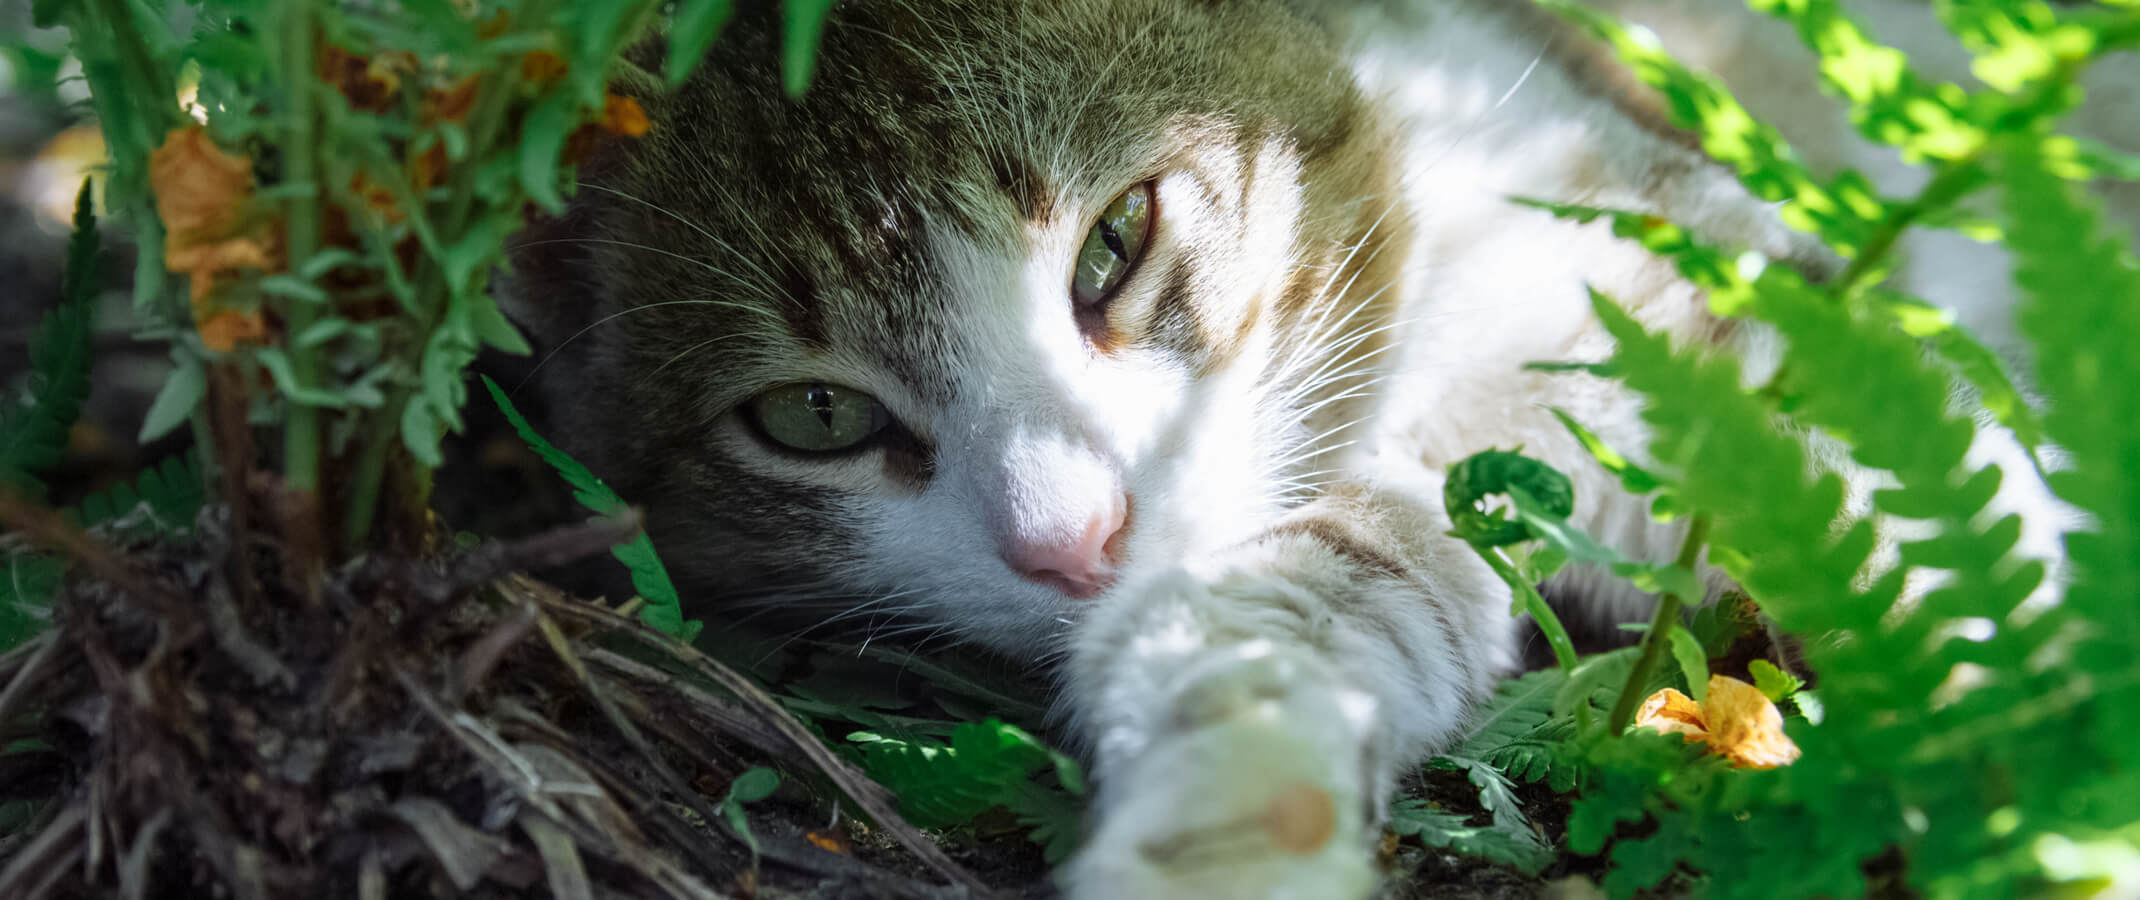 cat lying under fern